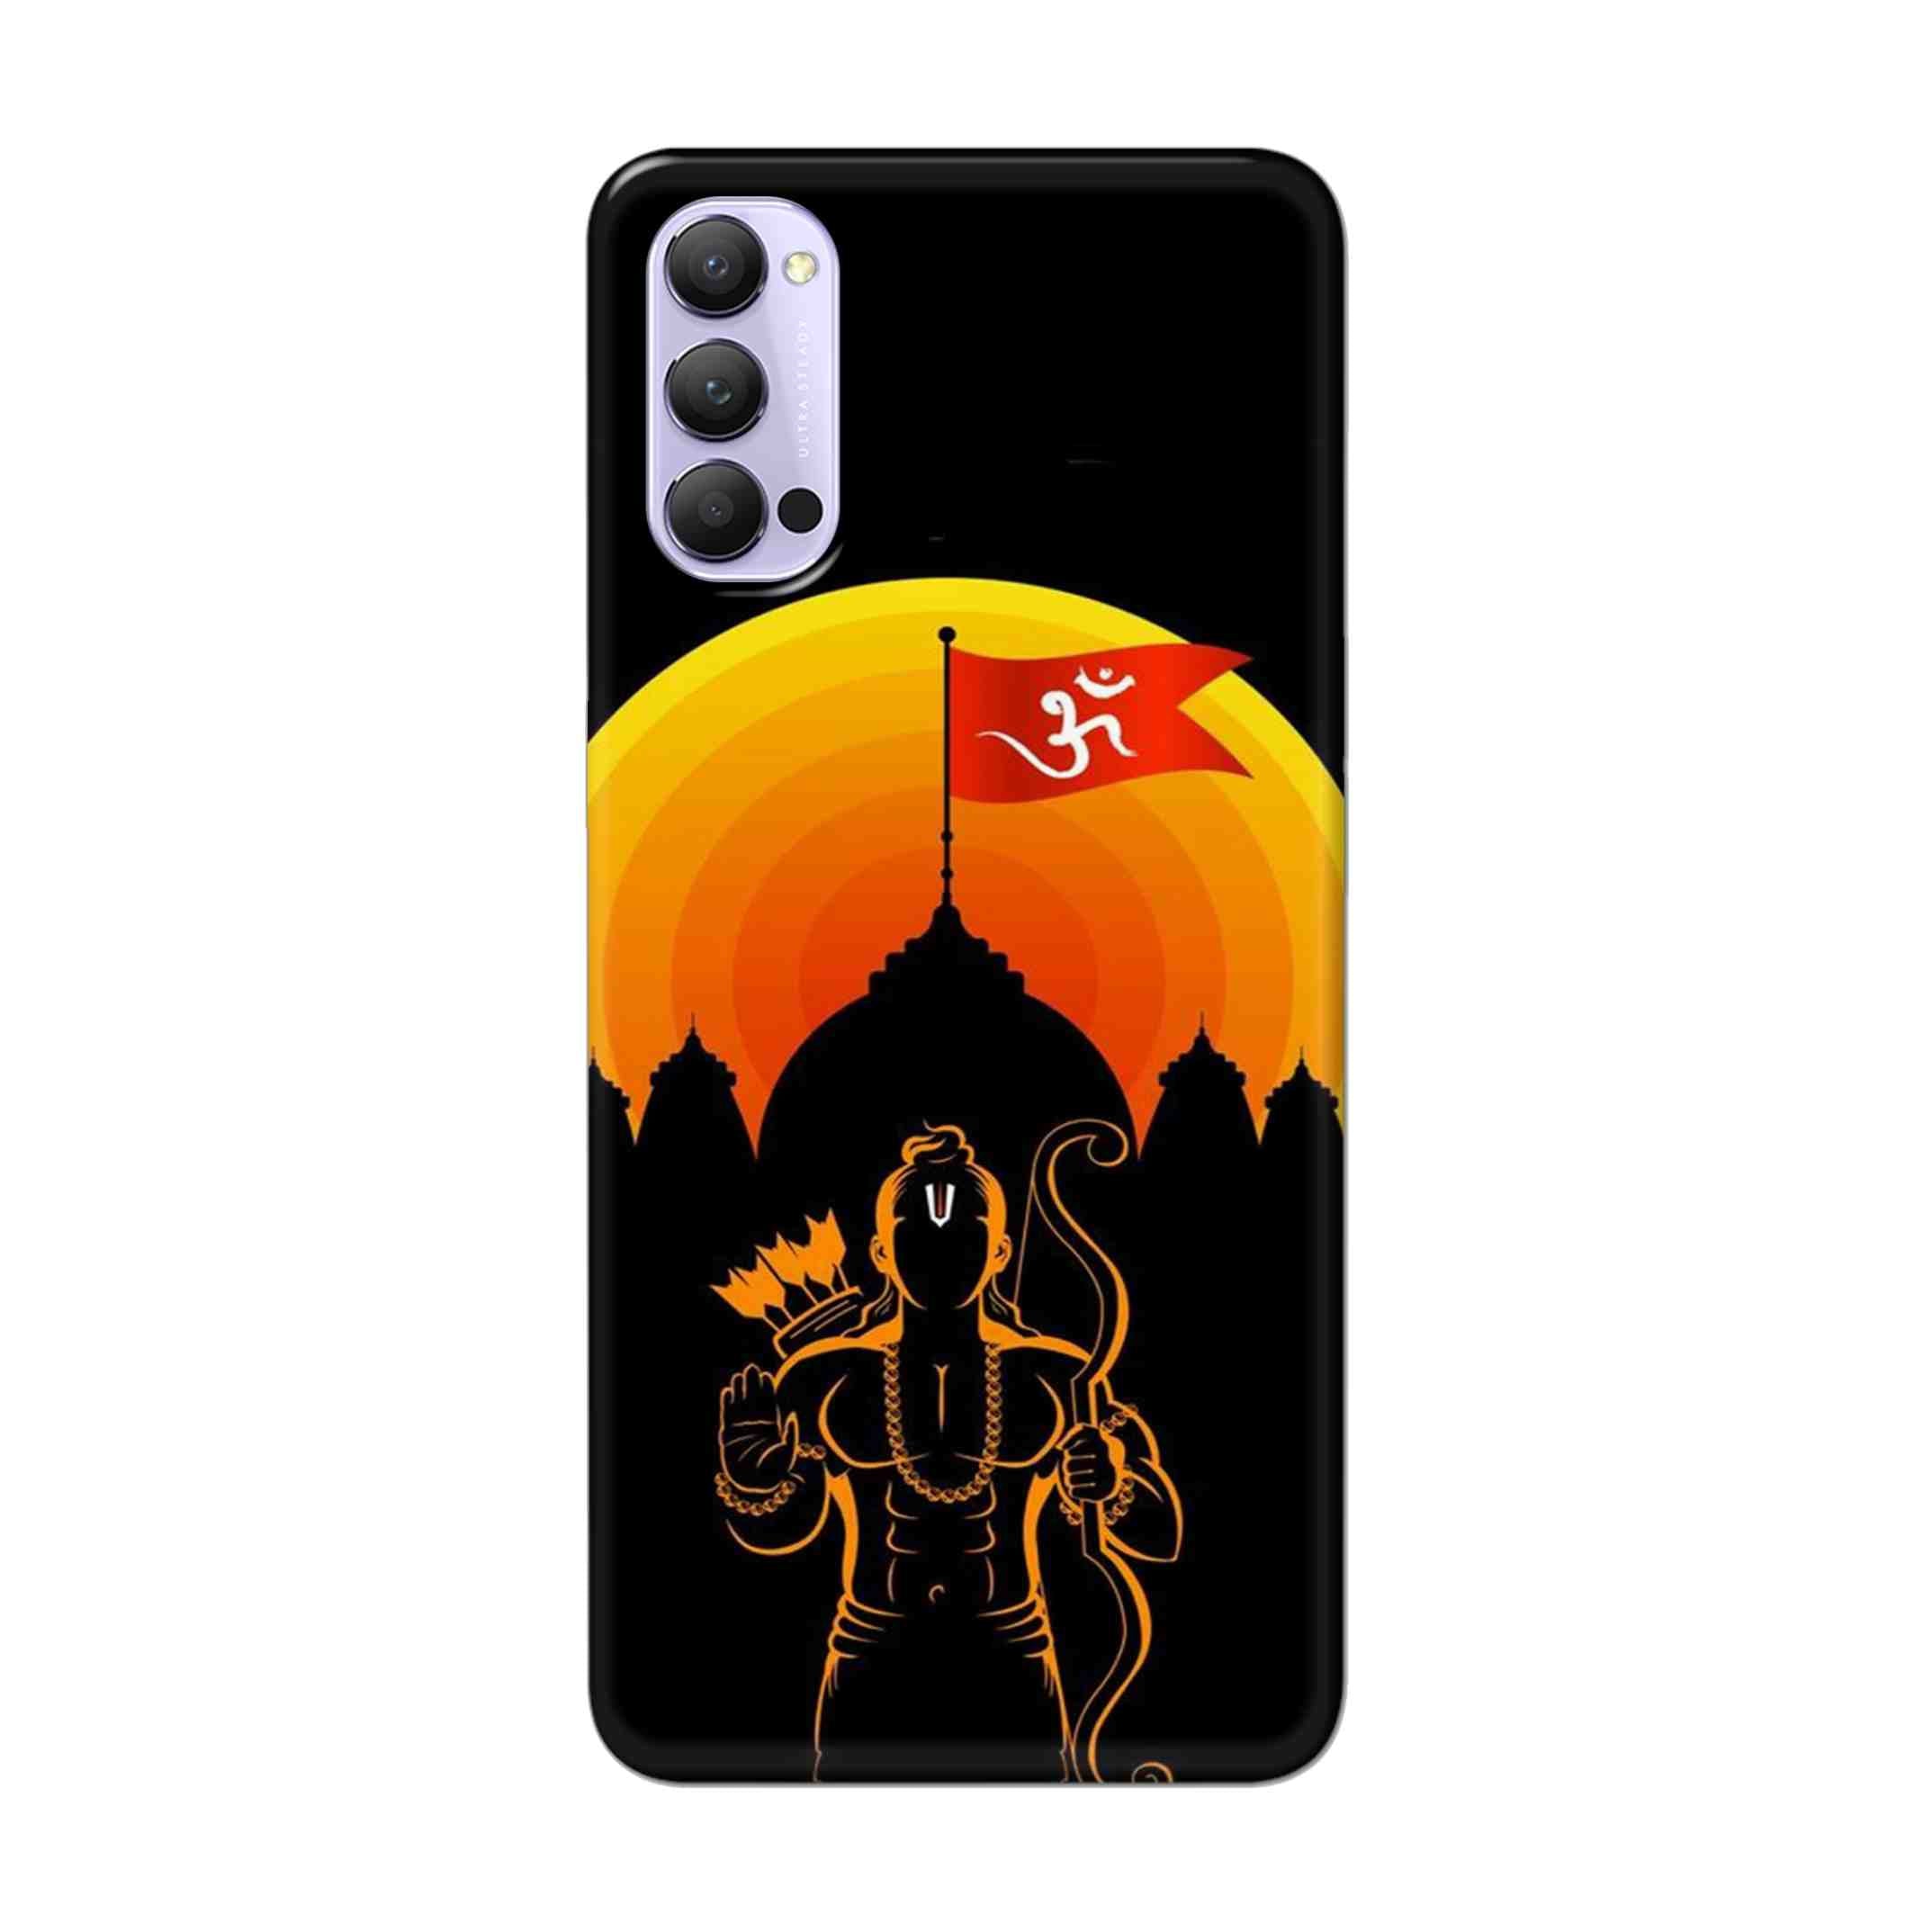 Buy Ram Ji Hard Back Mobile Phone Case Cover For Oppo Reno 4 Pro Online